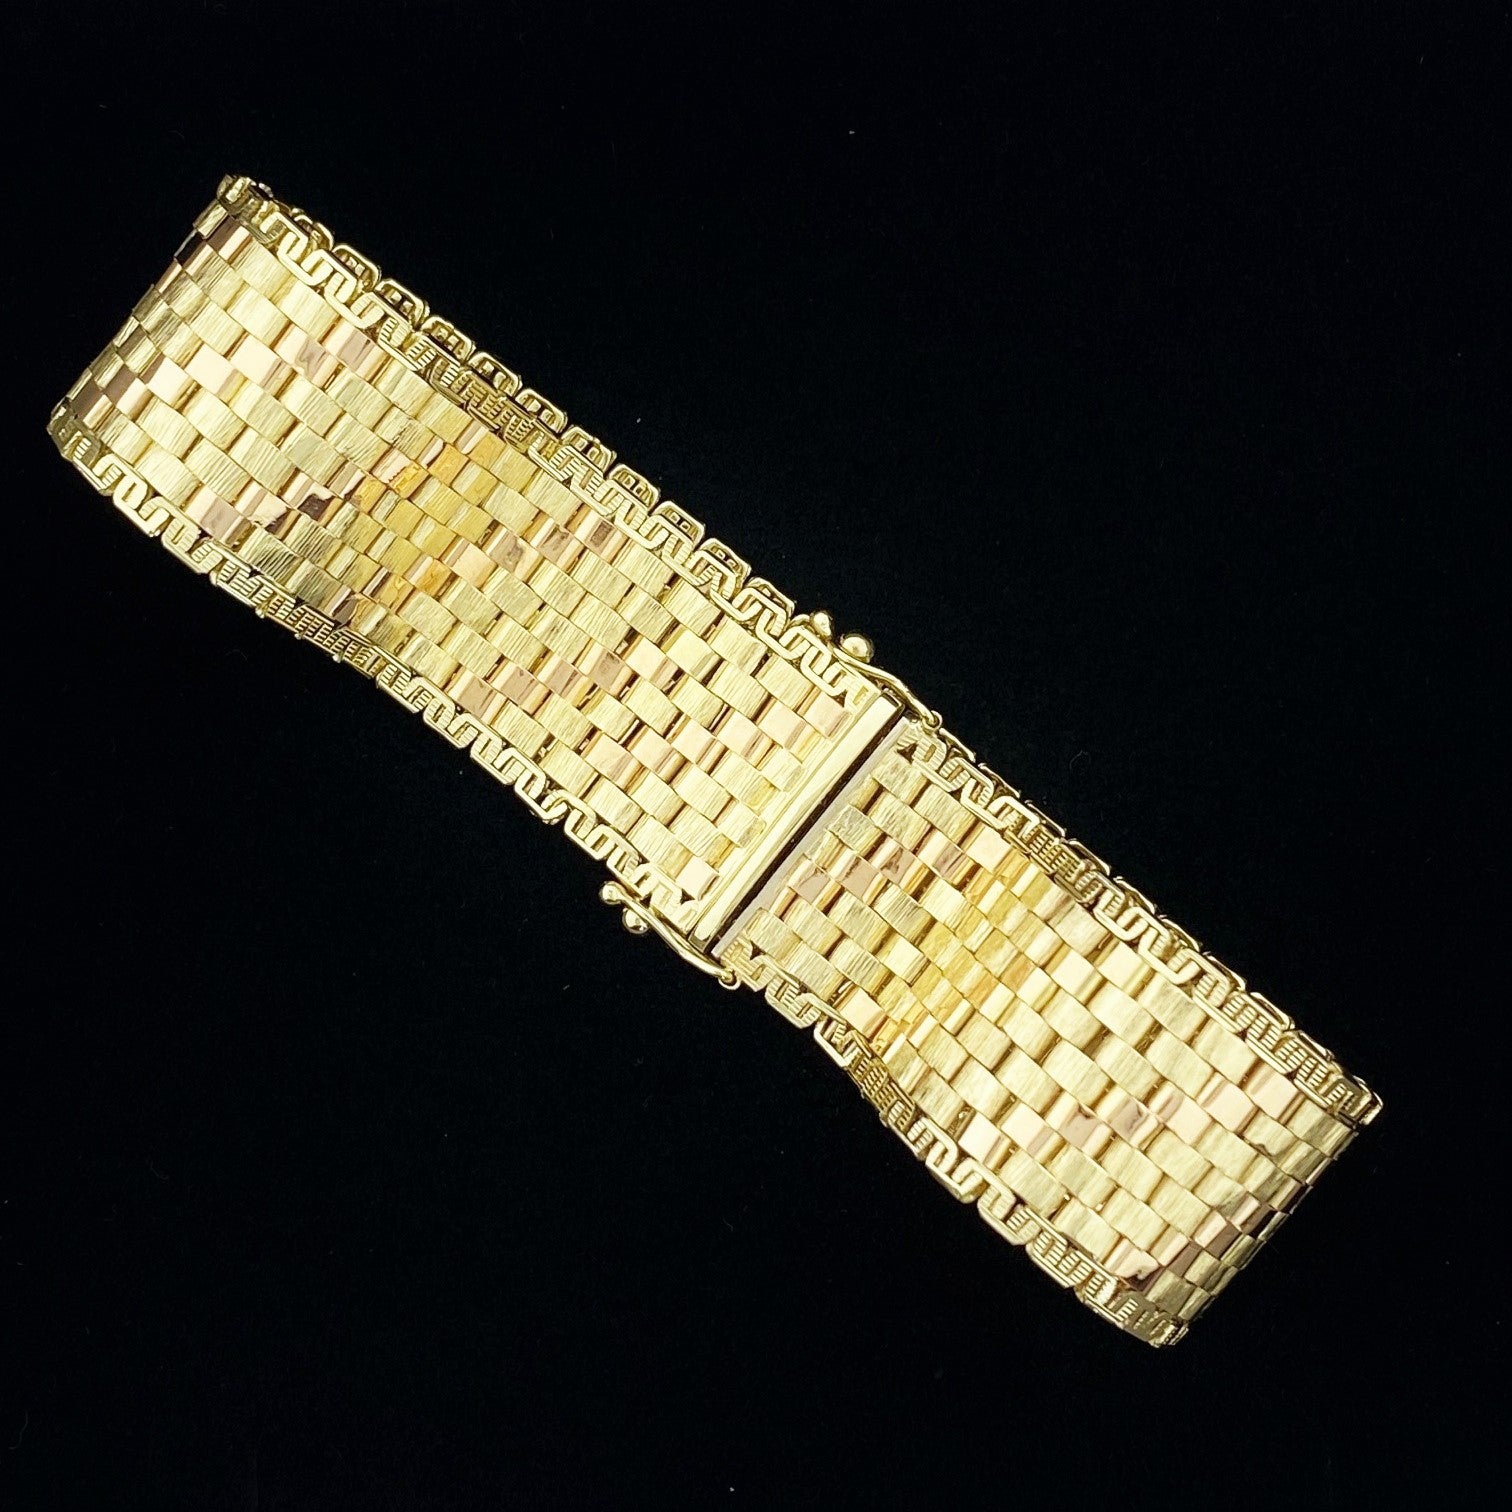 Vintage gold bracelet with textured surface